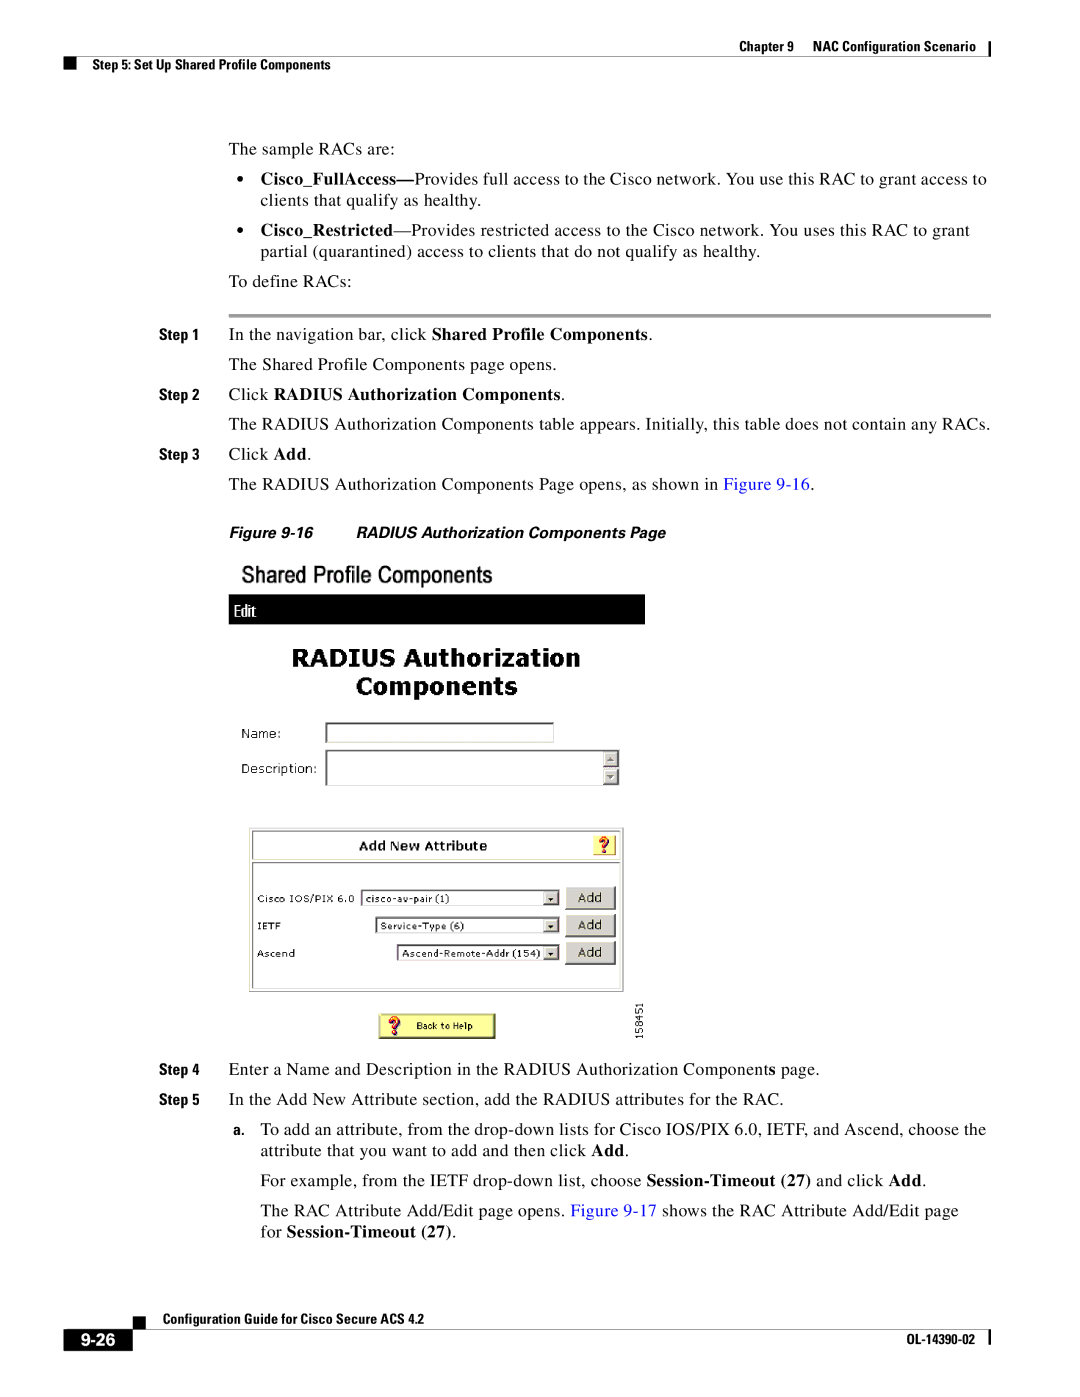 Cisco Systems 4.2 manual Click Radius Authorization Components 